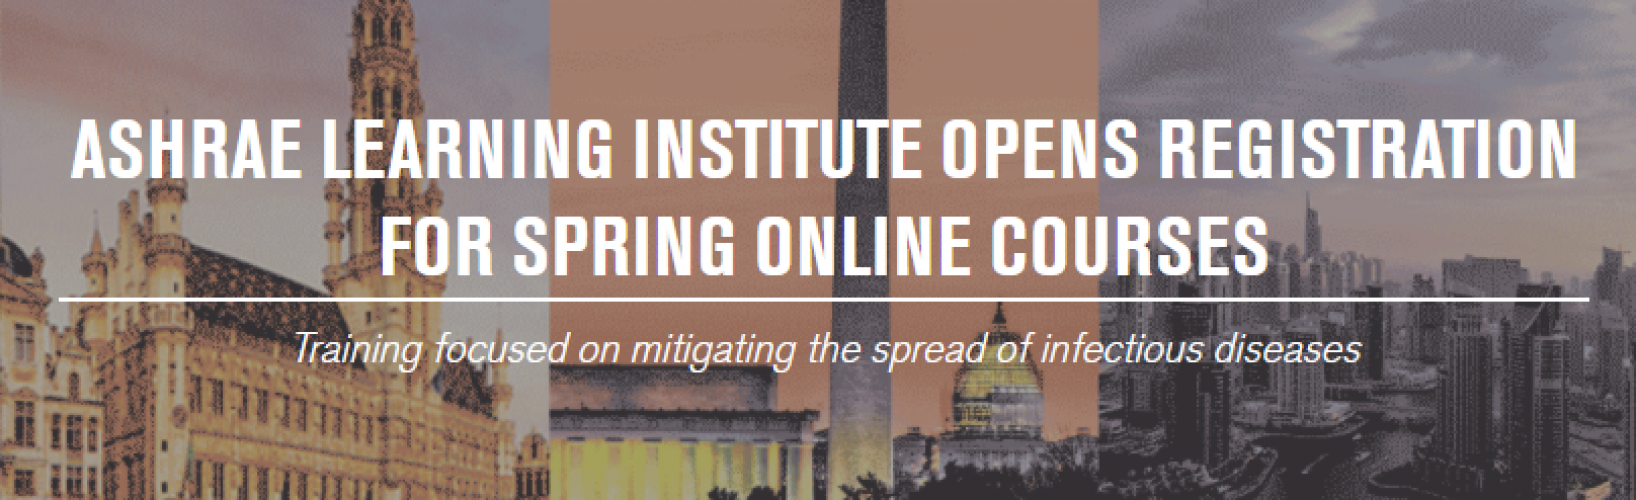 ashrae-learning-institute-opens-registration-for-spring-online-courses